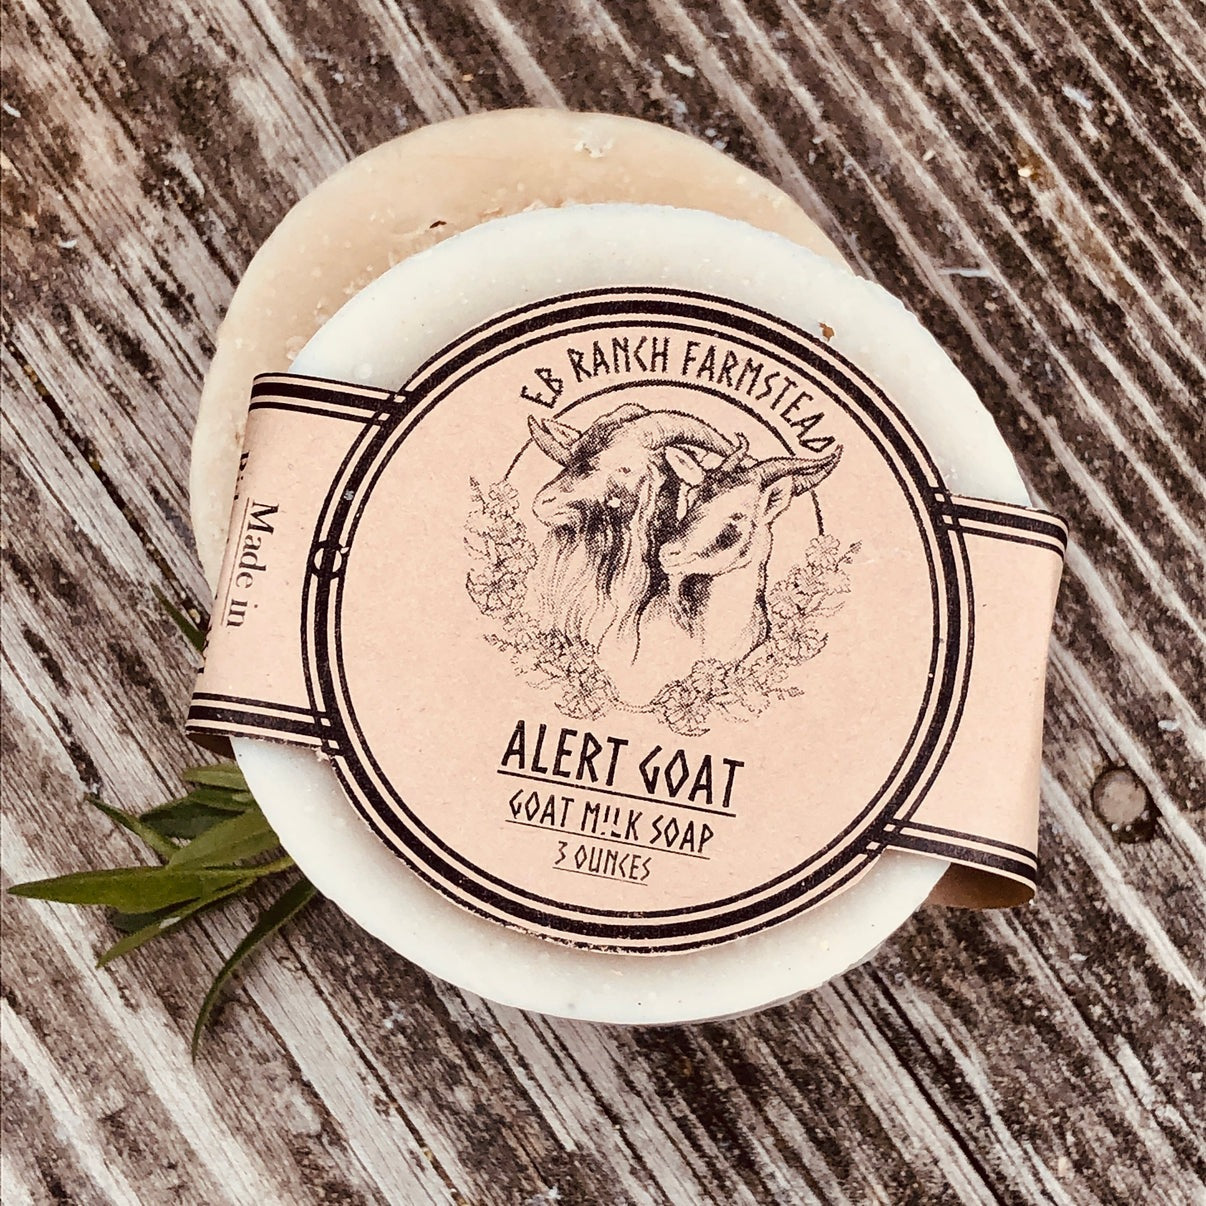 Bar of Wild Haven Farm's Alert Goat goat milk soap made with San Clemente Island goat milk